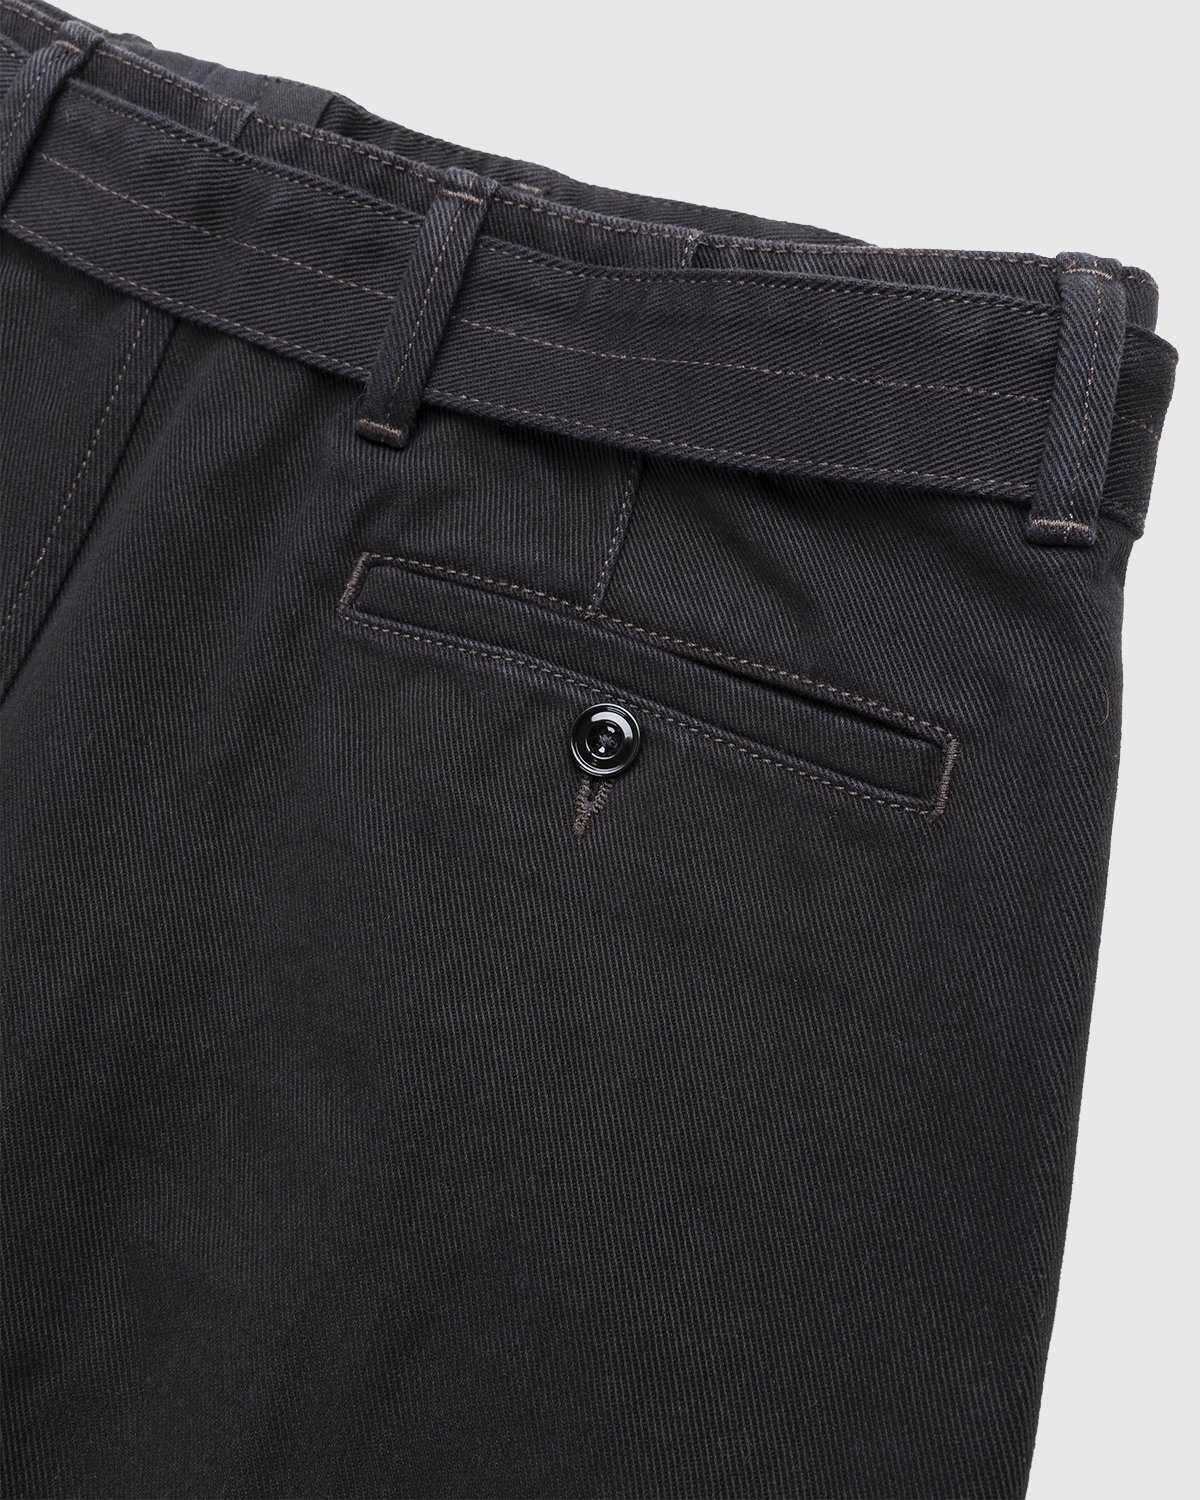 Lemaire - Rinsed Denim Twisted Pants Black - Clothing - Black - Image 3